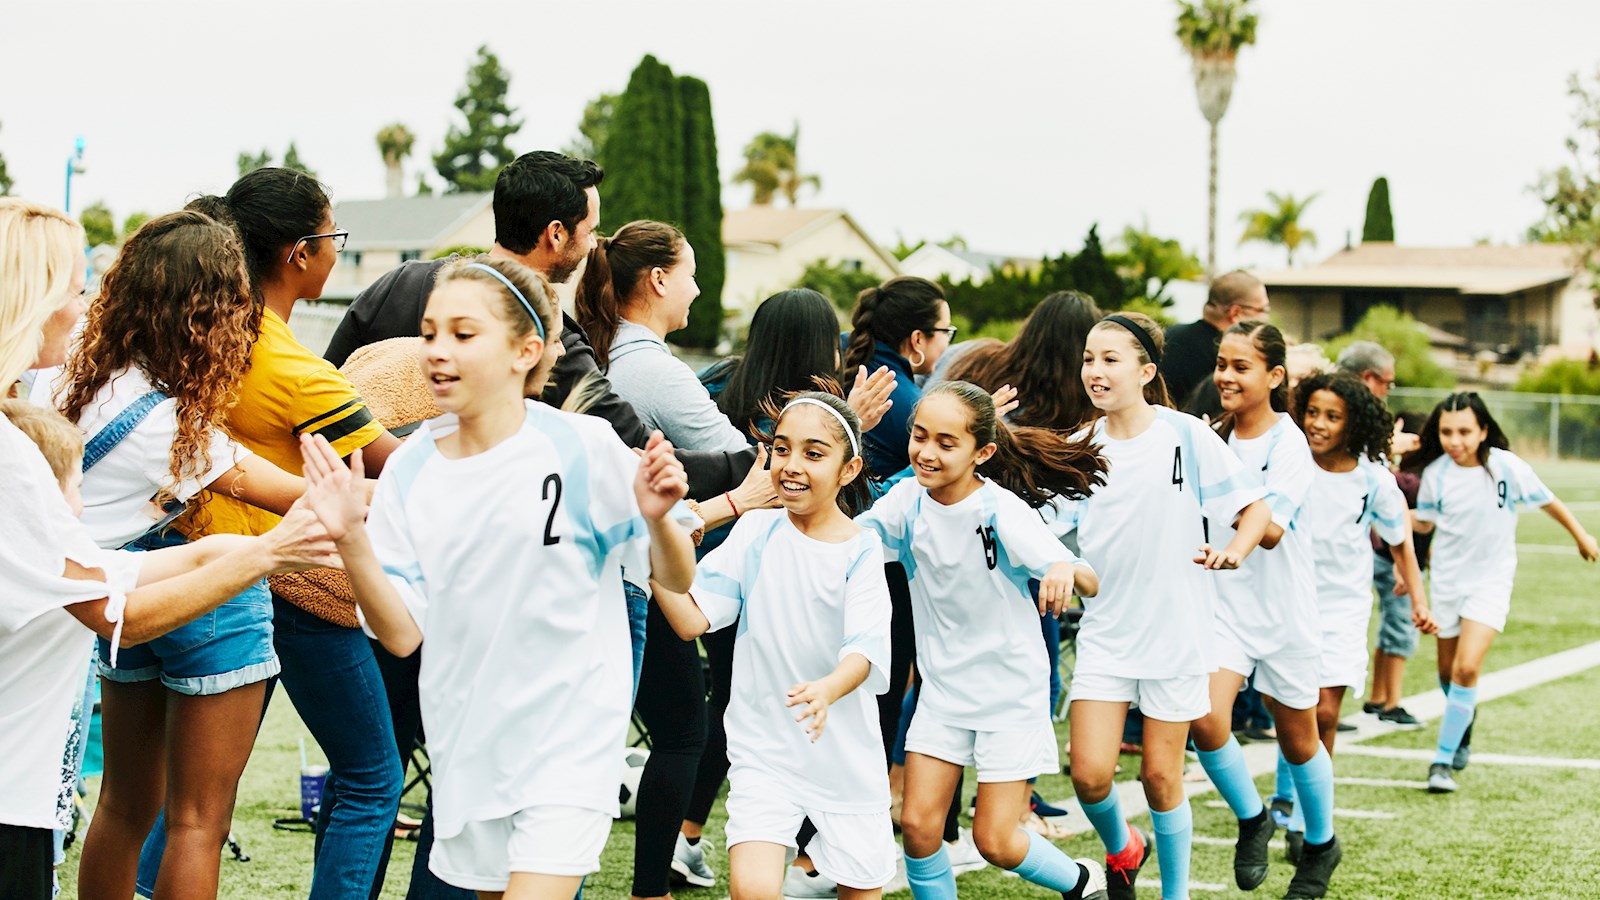 Team Girls building strong women of the future through sport, group sport 